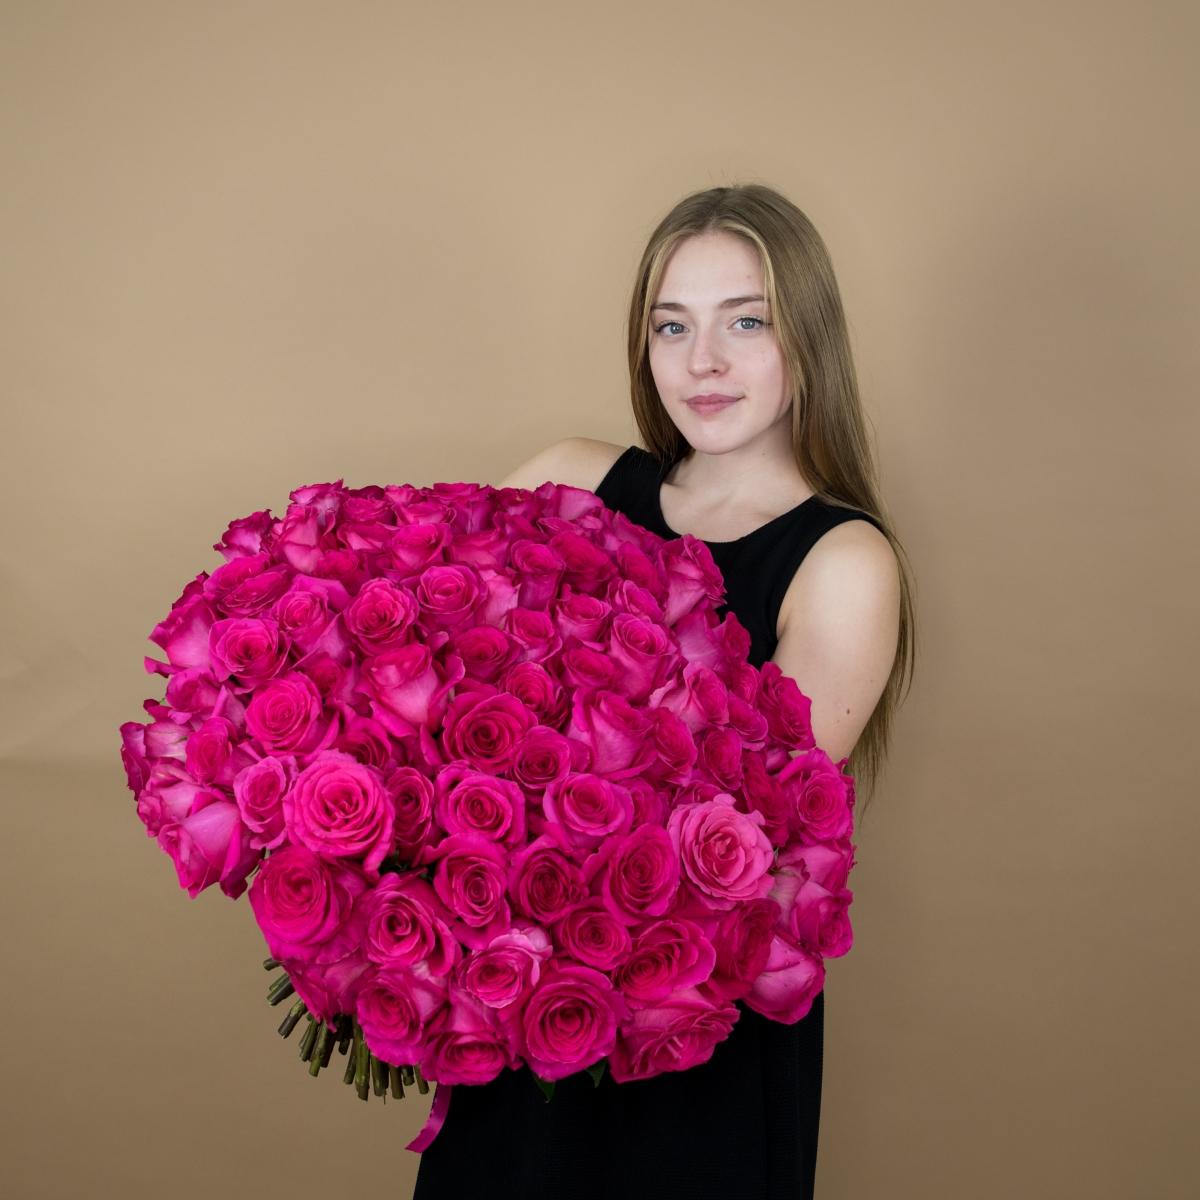 Букет из розовых роз 75 шт. (40 см) артикул: 81928